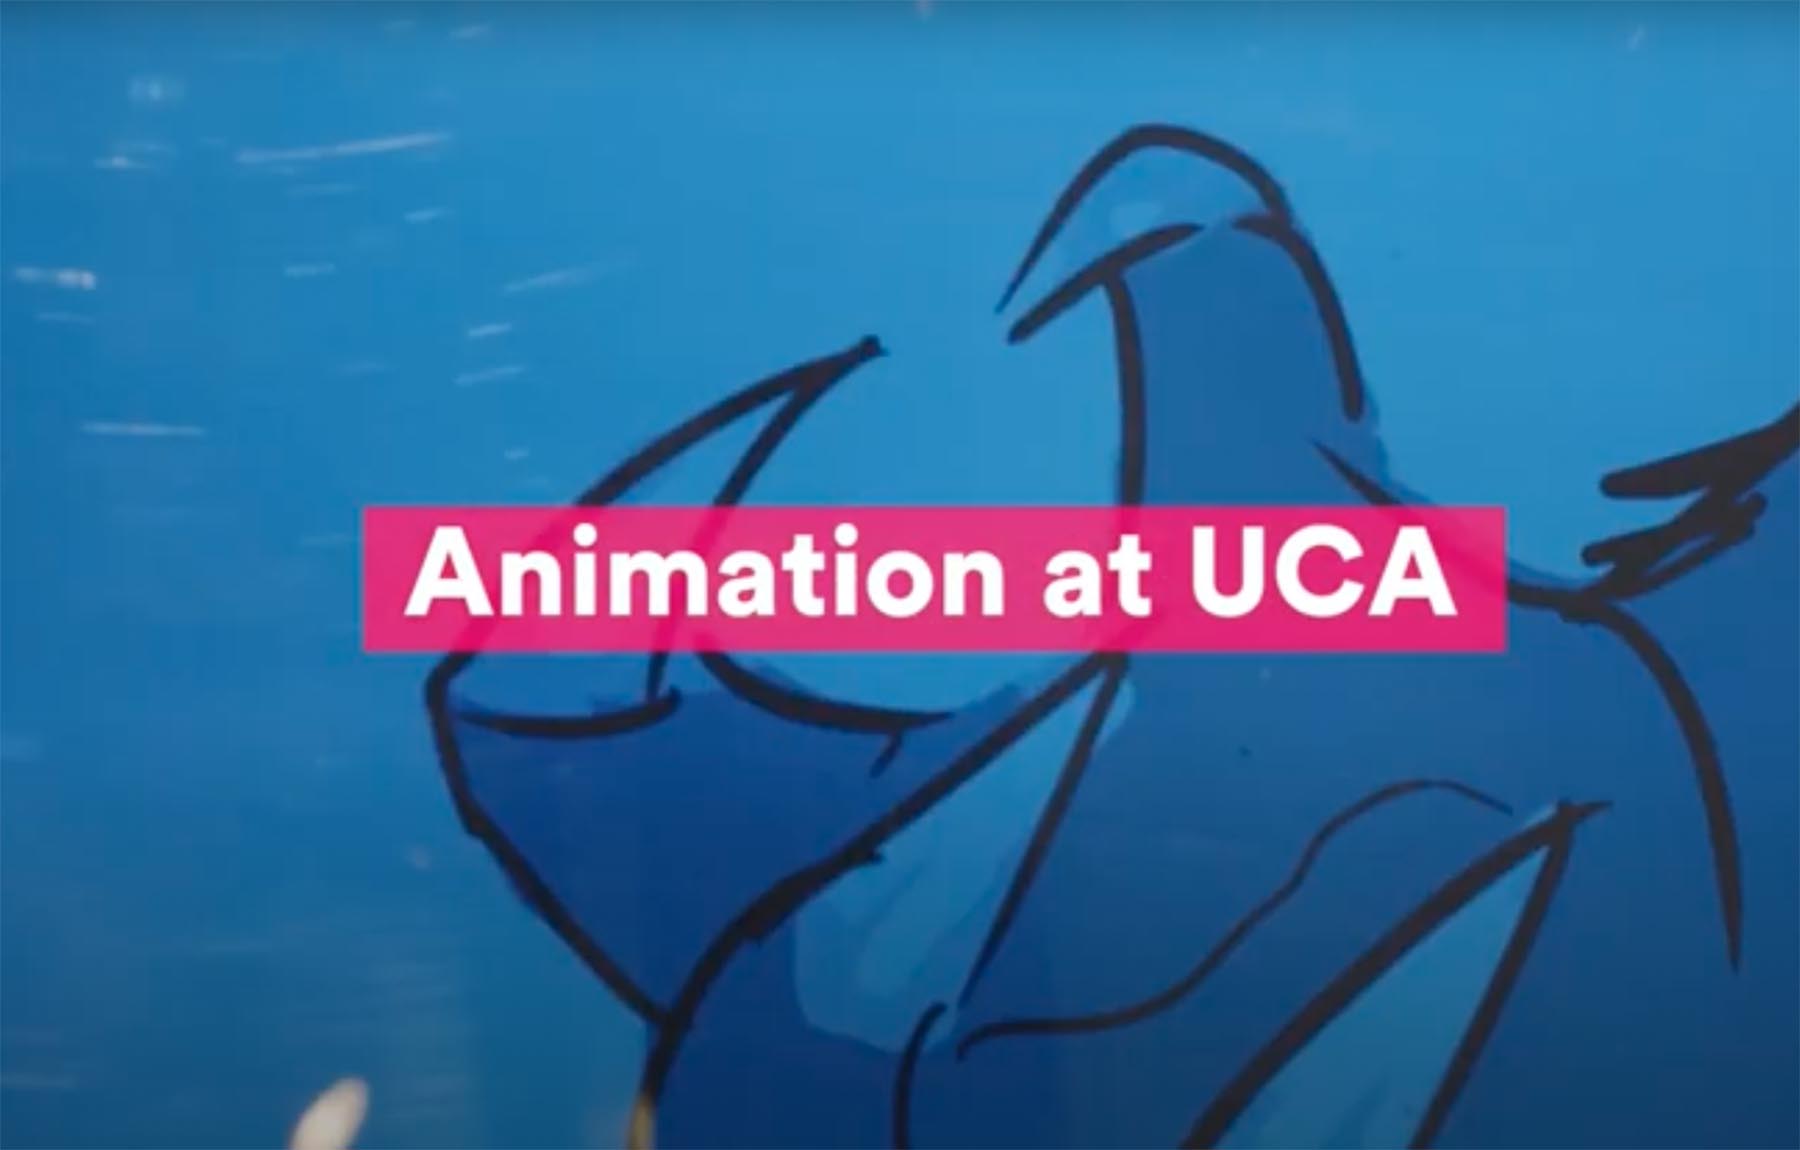 Animation at UCA